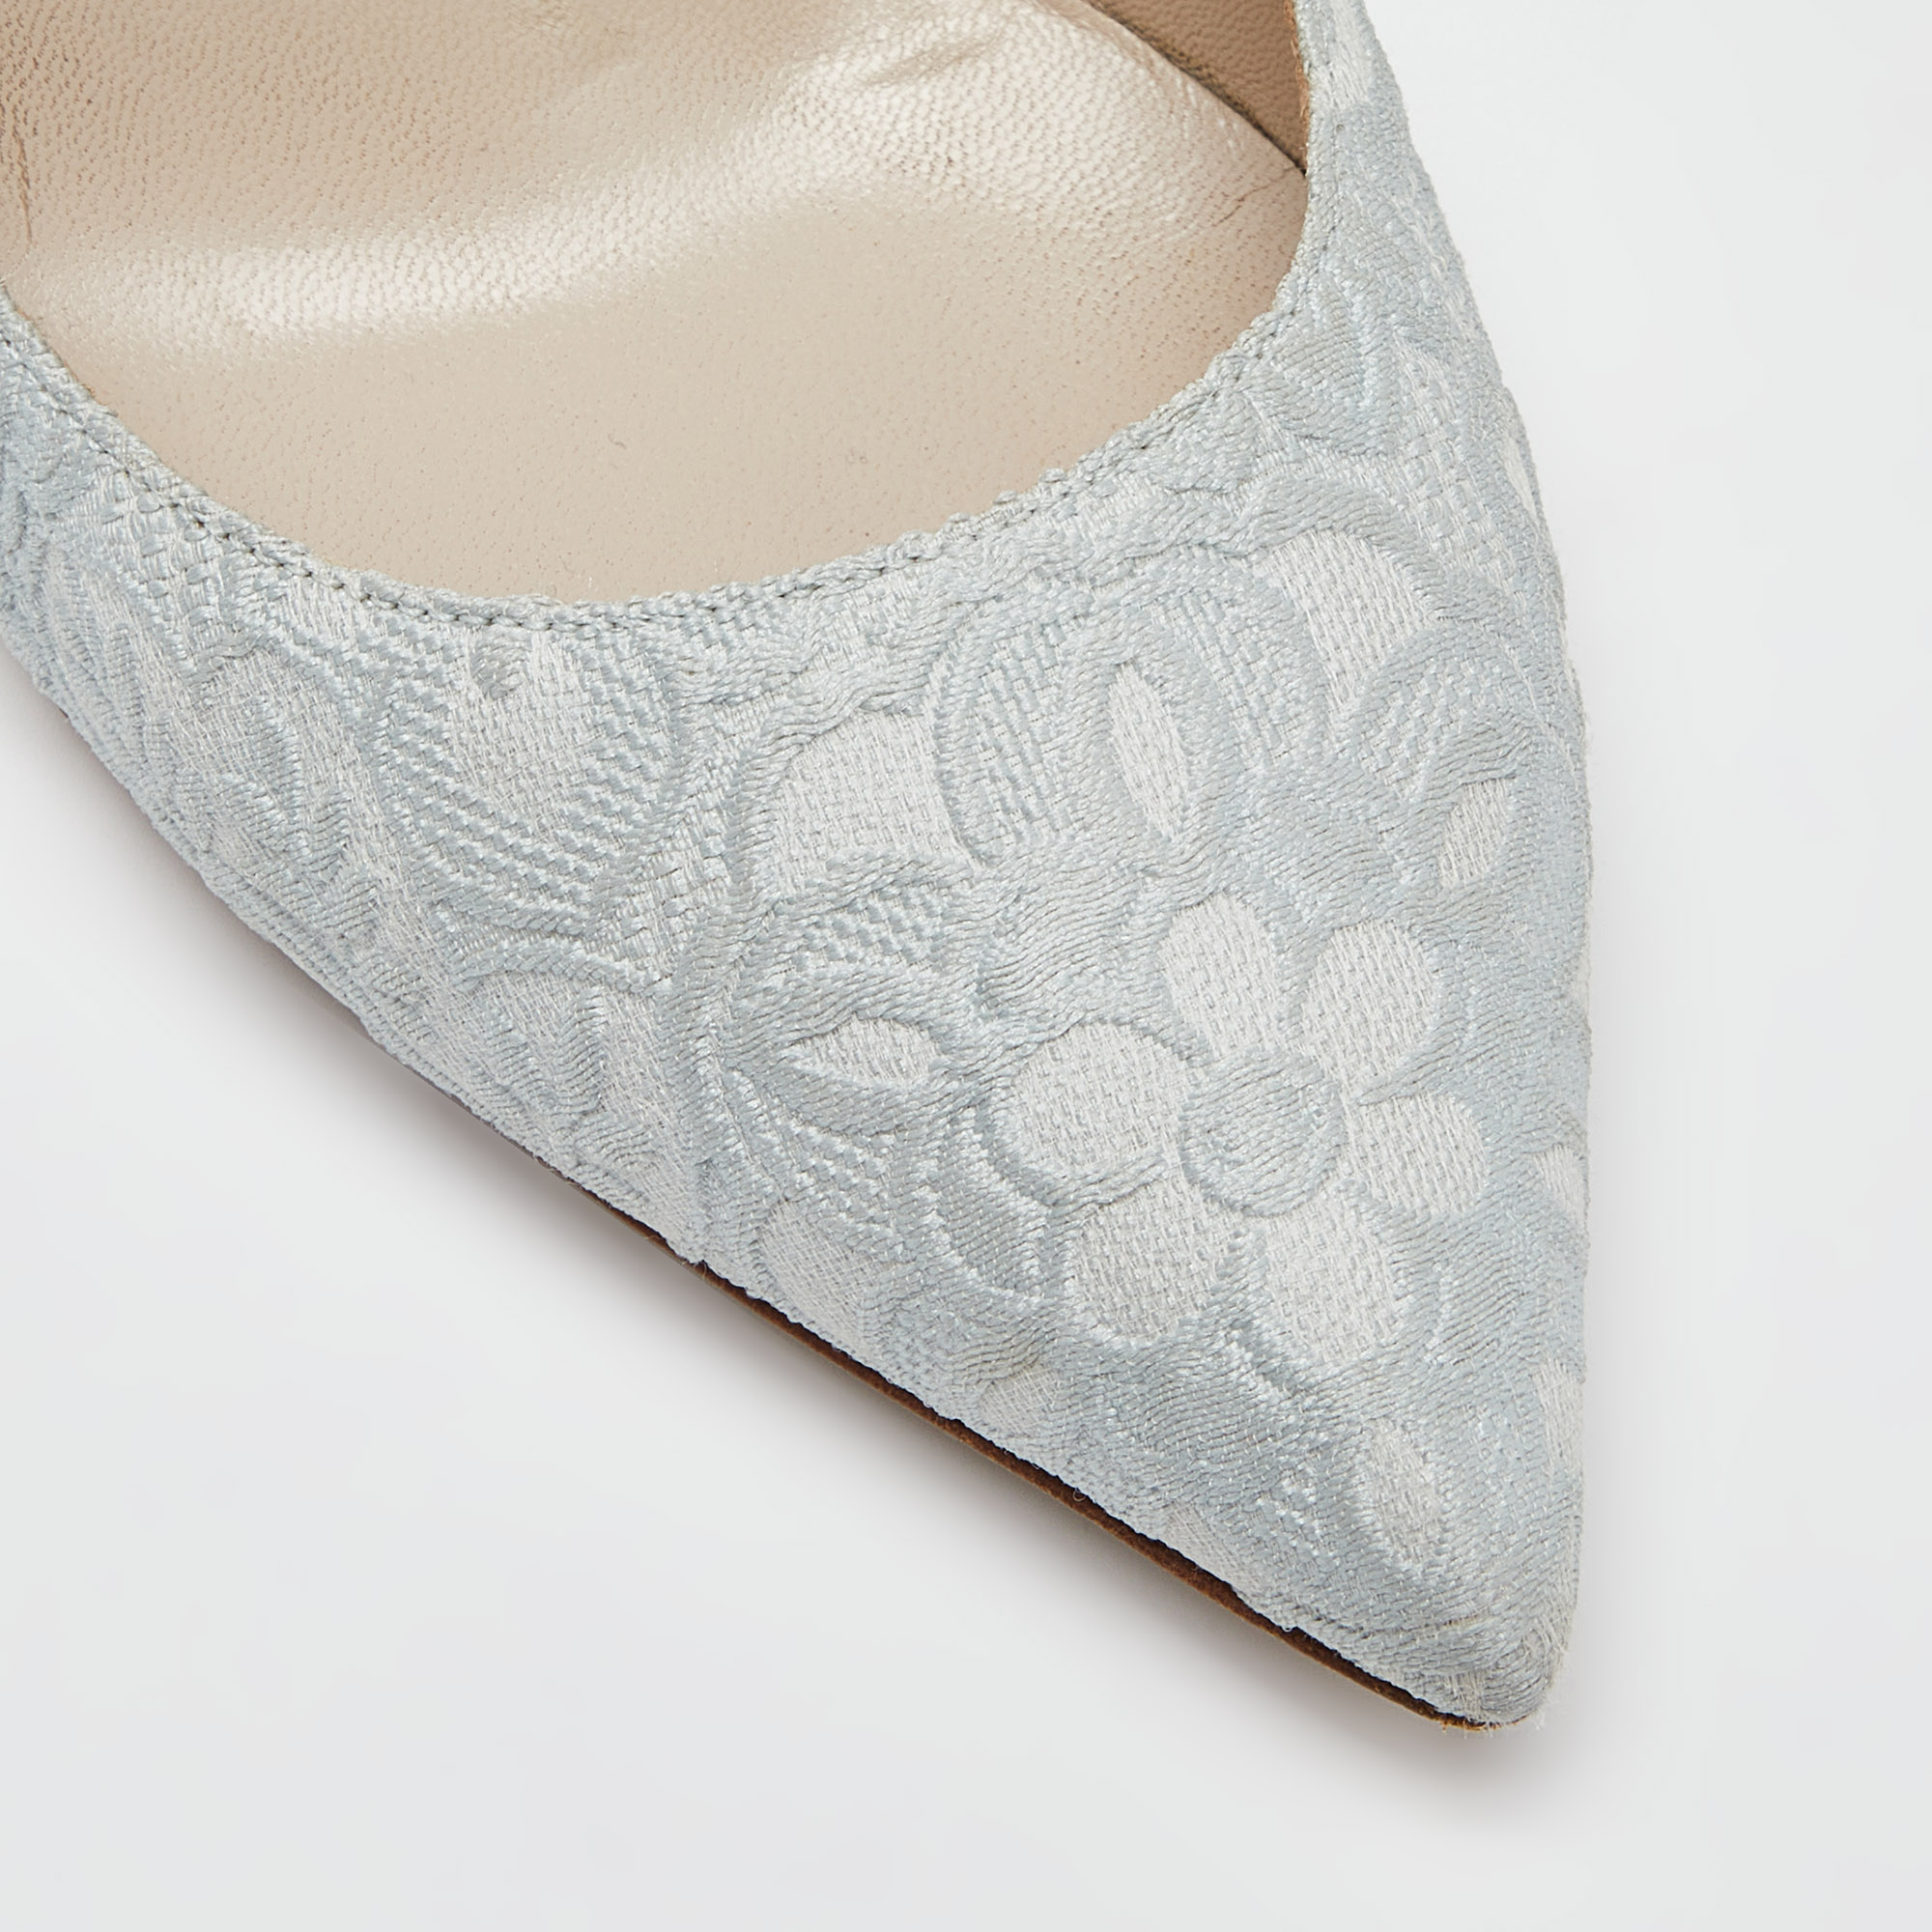 Dolce & Gabbana Light Blue Brocade Fabric Pointed Toe Pumps Size 40